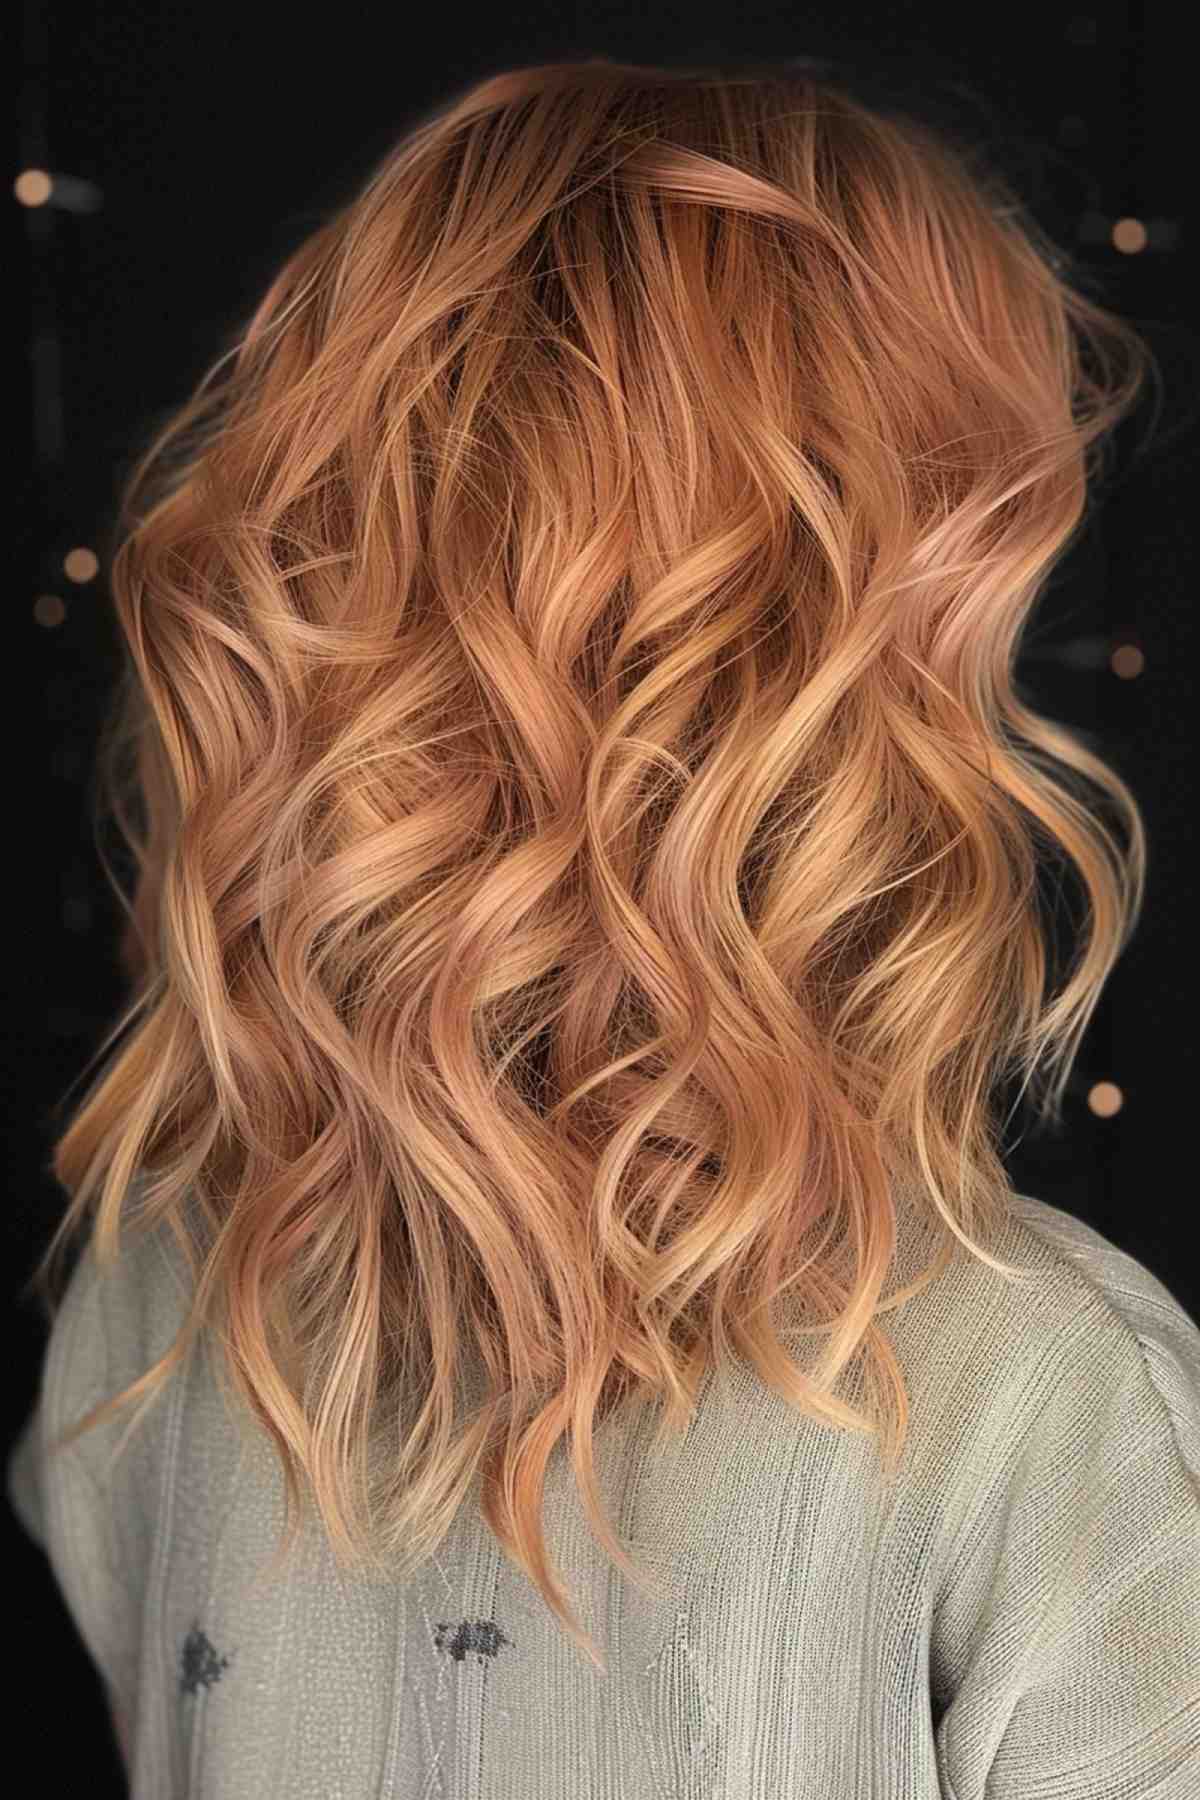 Medium-length wavy hair with peach balayage on strawberry blonde